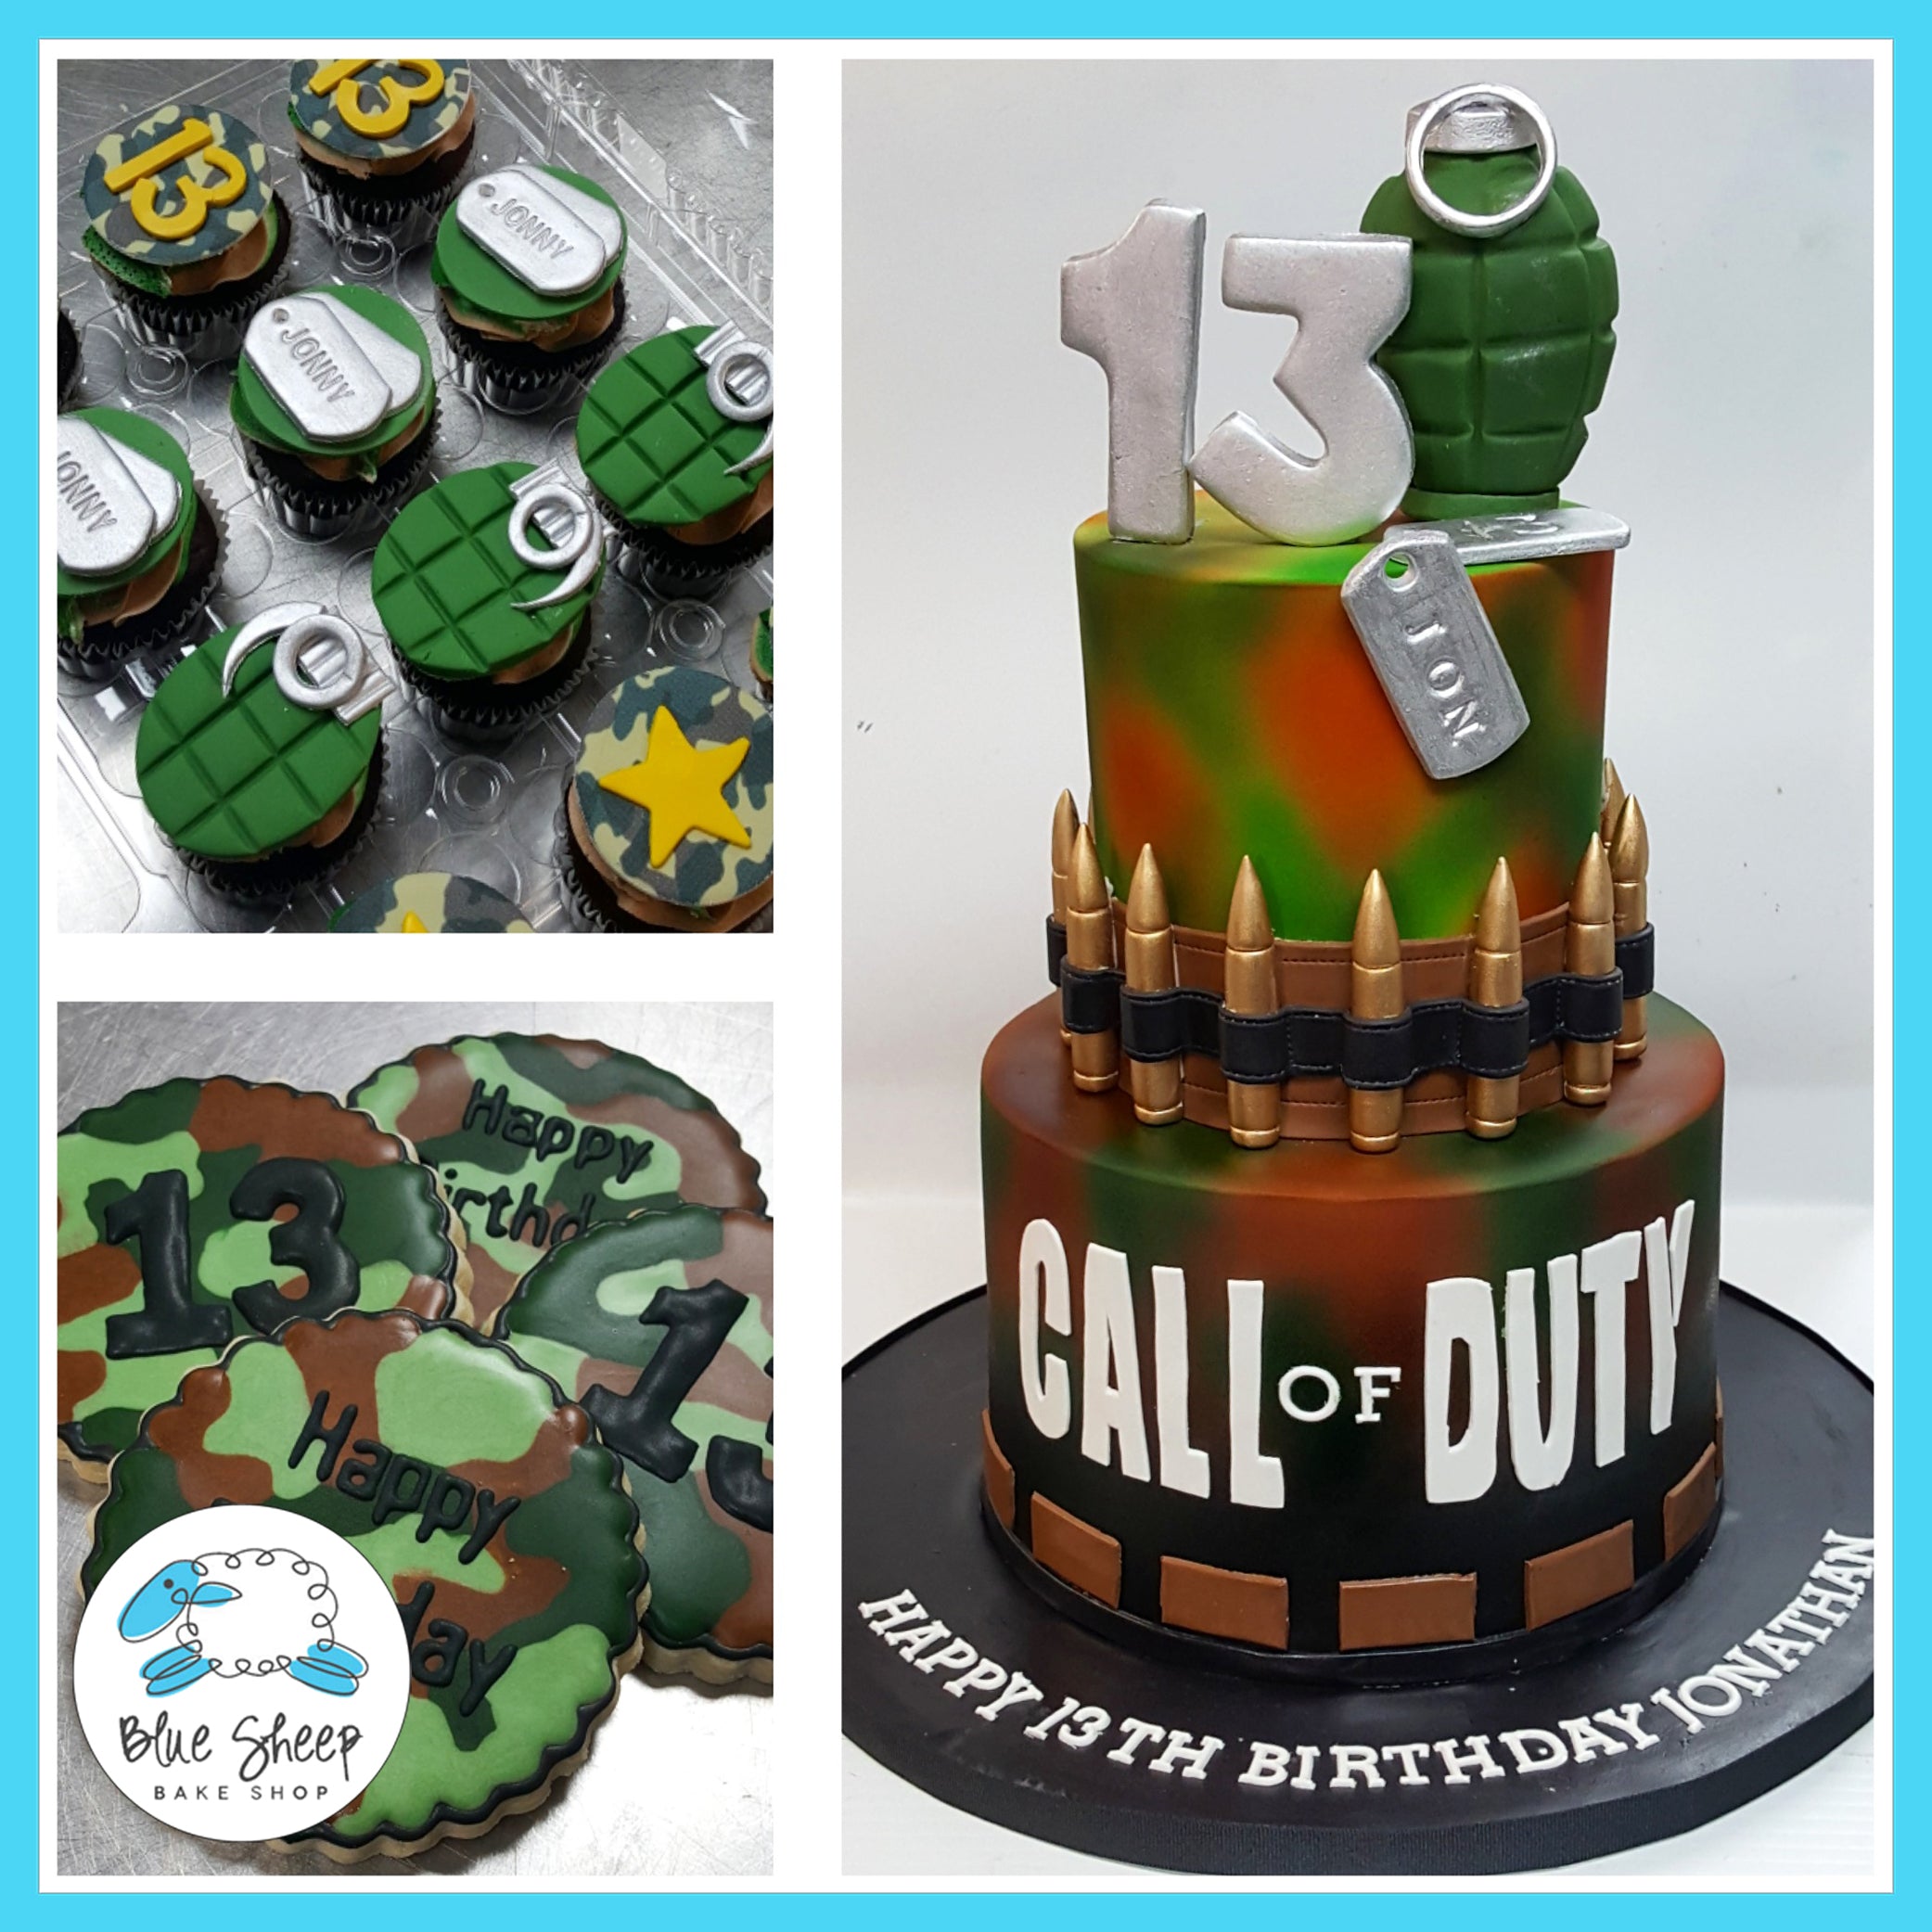 Call Of Duty Video Game Cake Nj Custom Cakes Blue Sheep Bake Shop